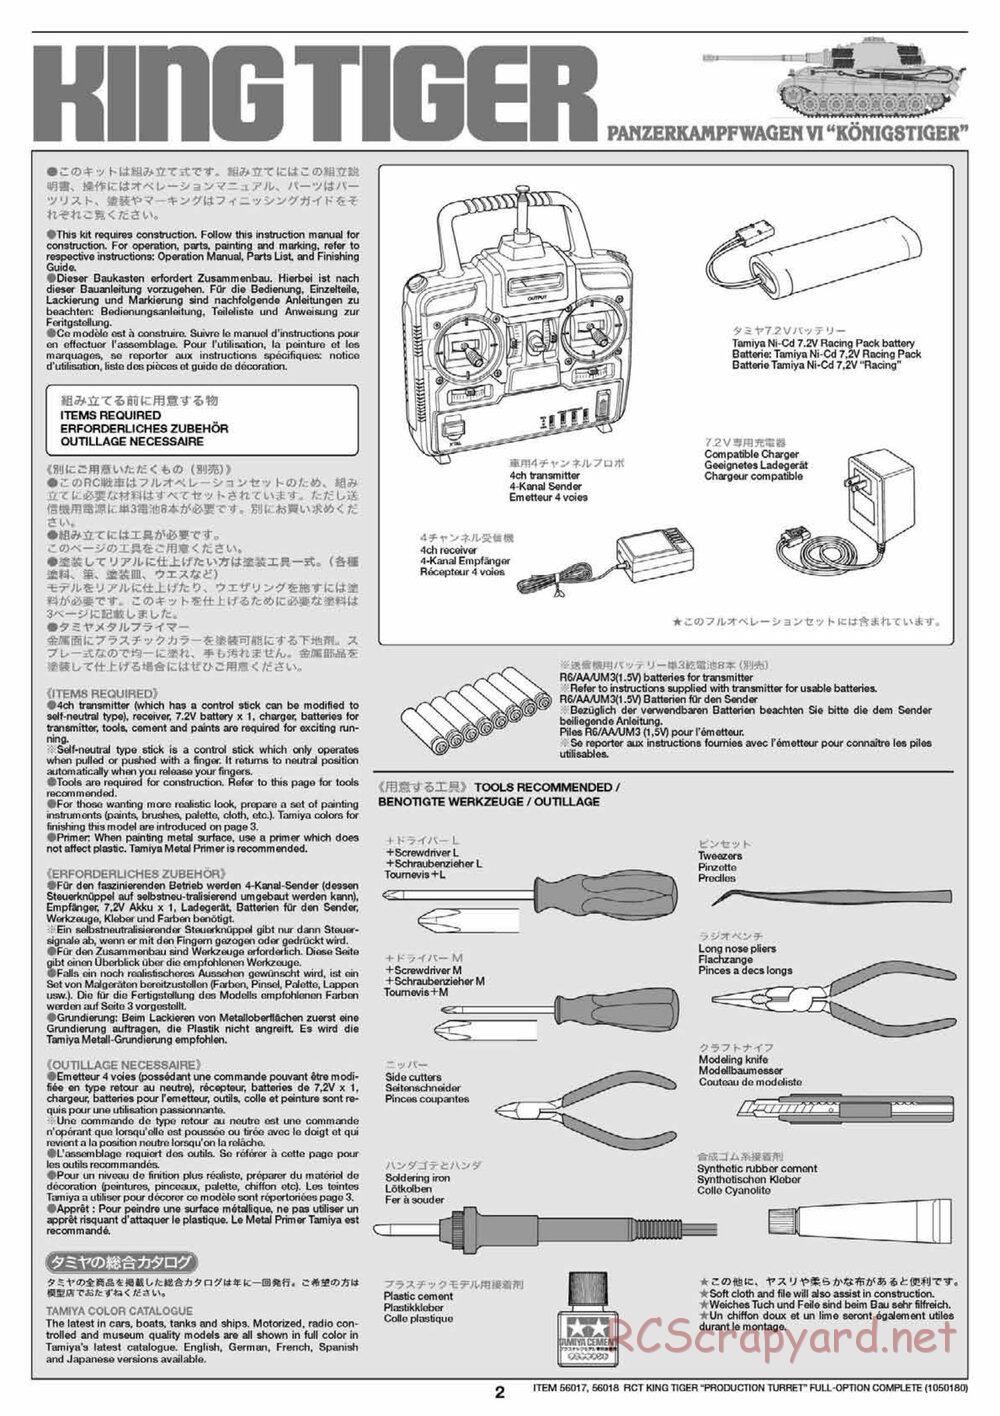 Tamiya - King Tiger - 1/16 Scale Chassis - Manual - Page 2